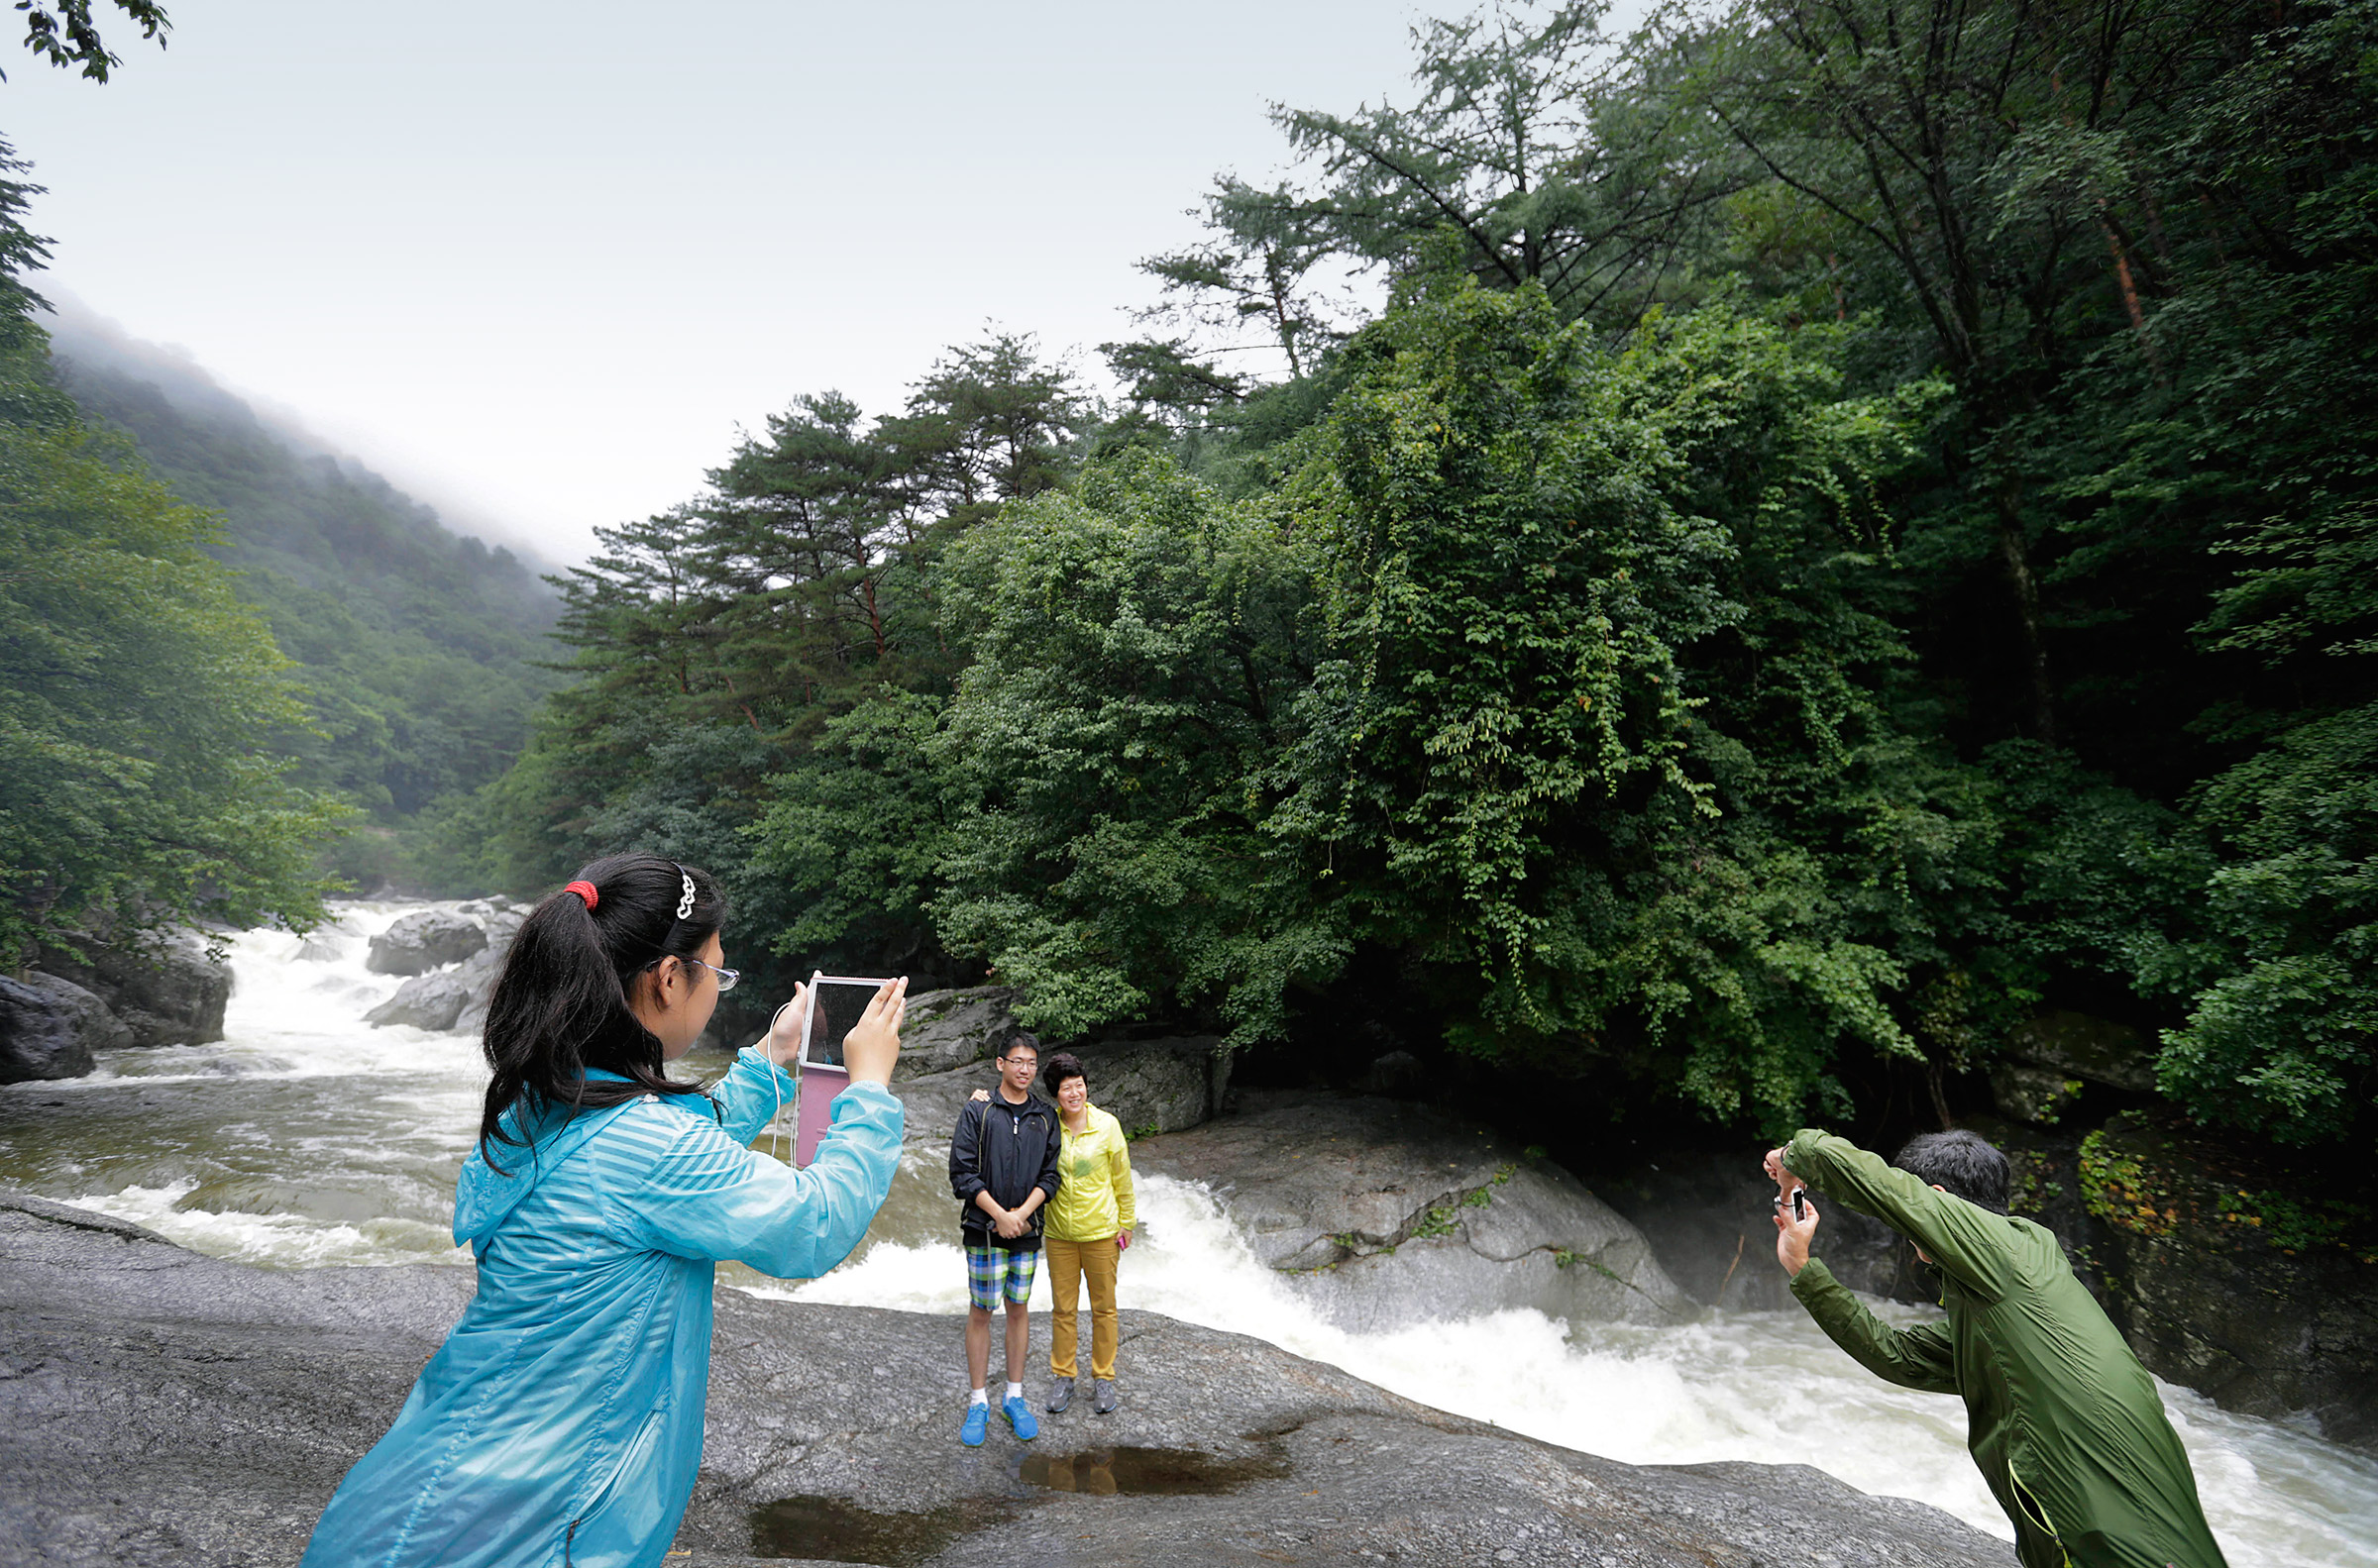 Chinese visitors take photographs at rapids at Mount Myonhyang, a North Korean tourist attraction